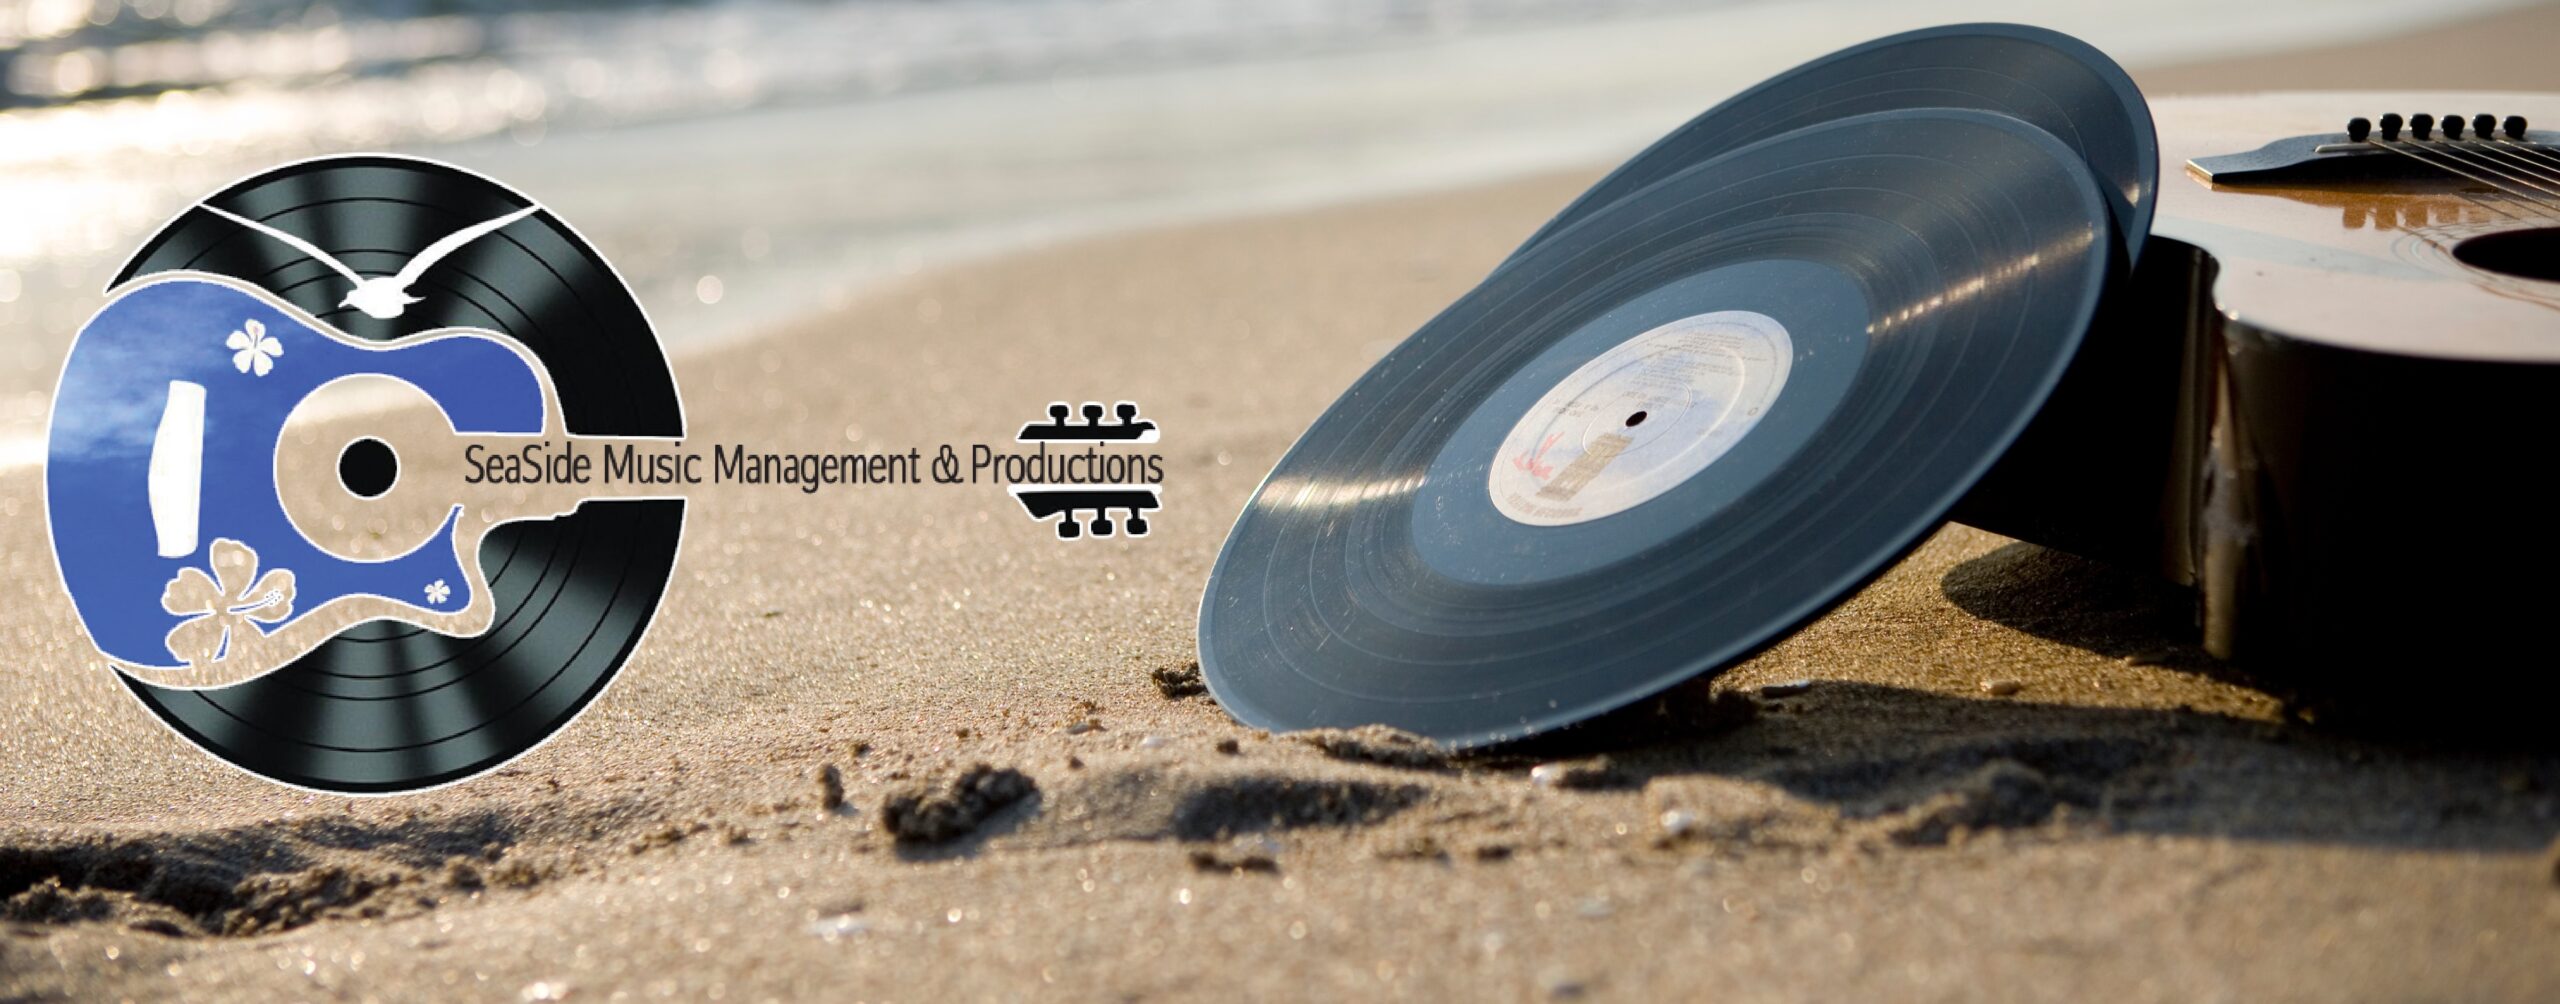 Seaside Music Management